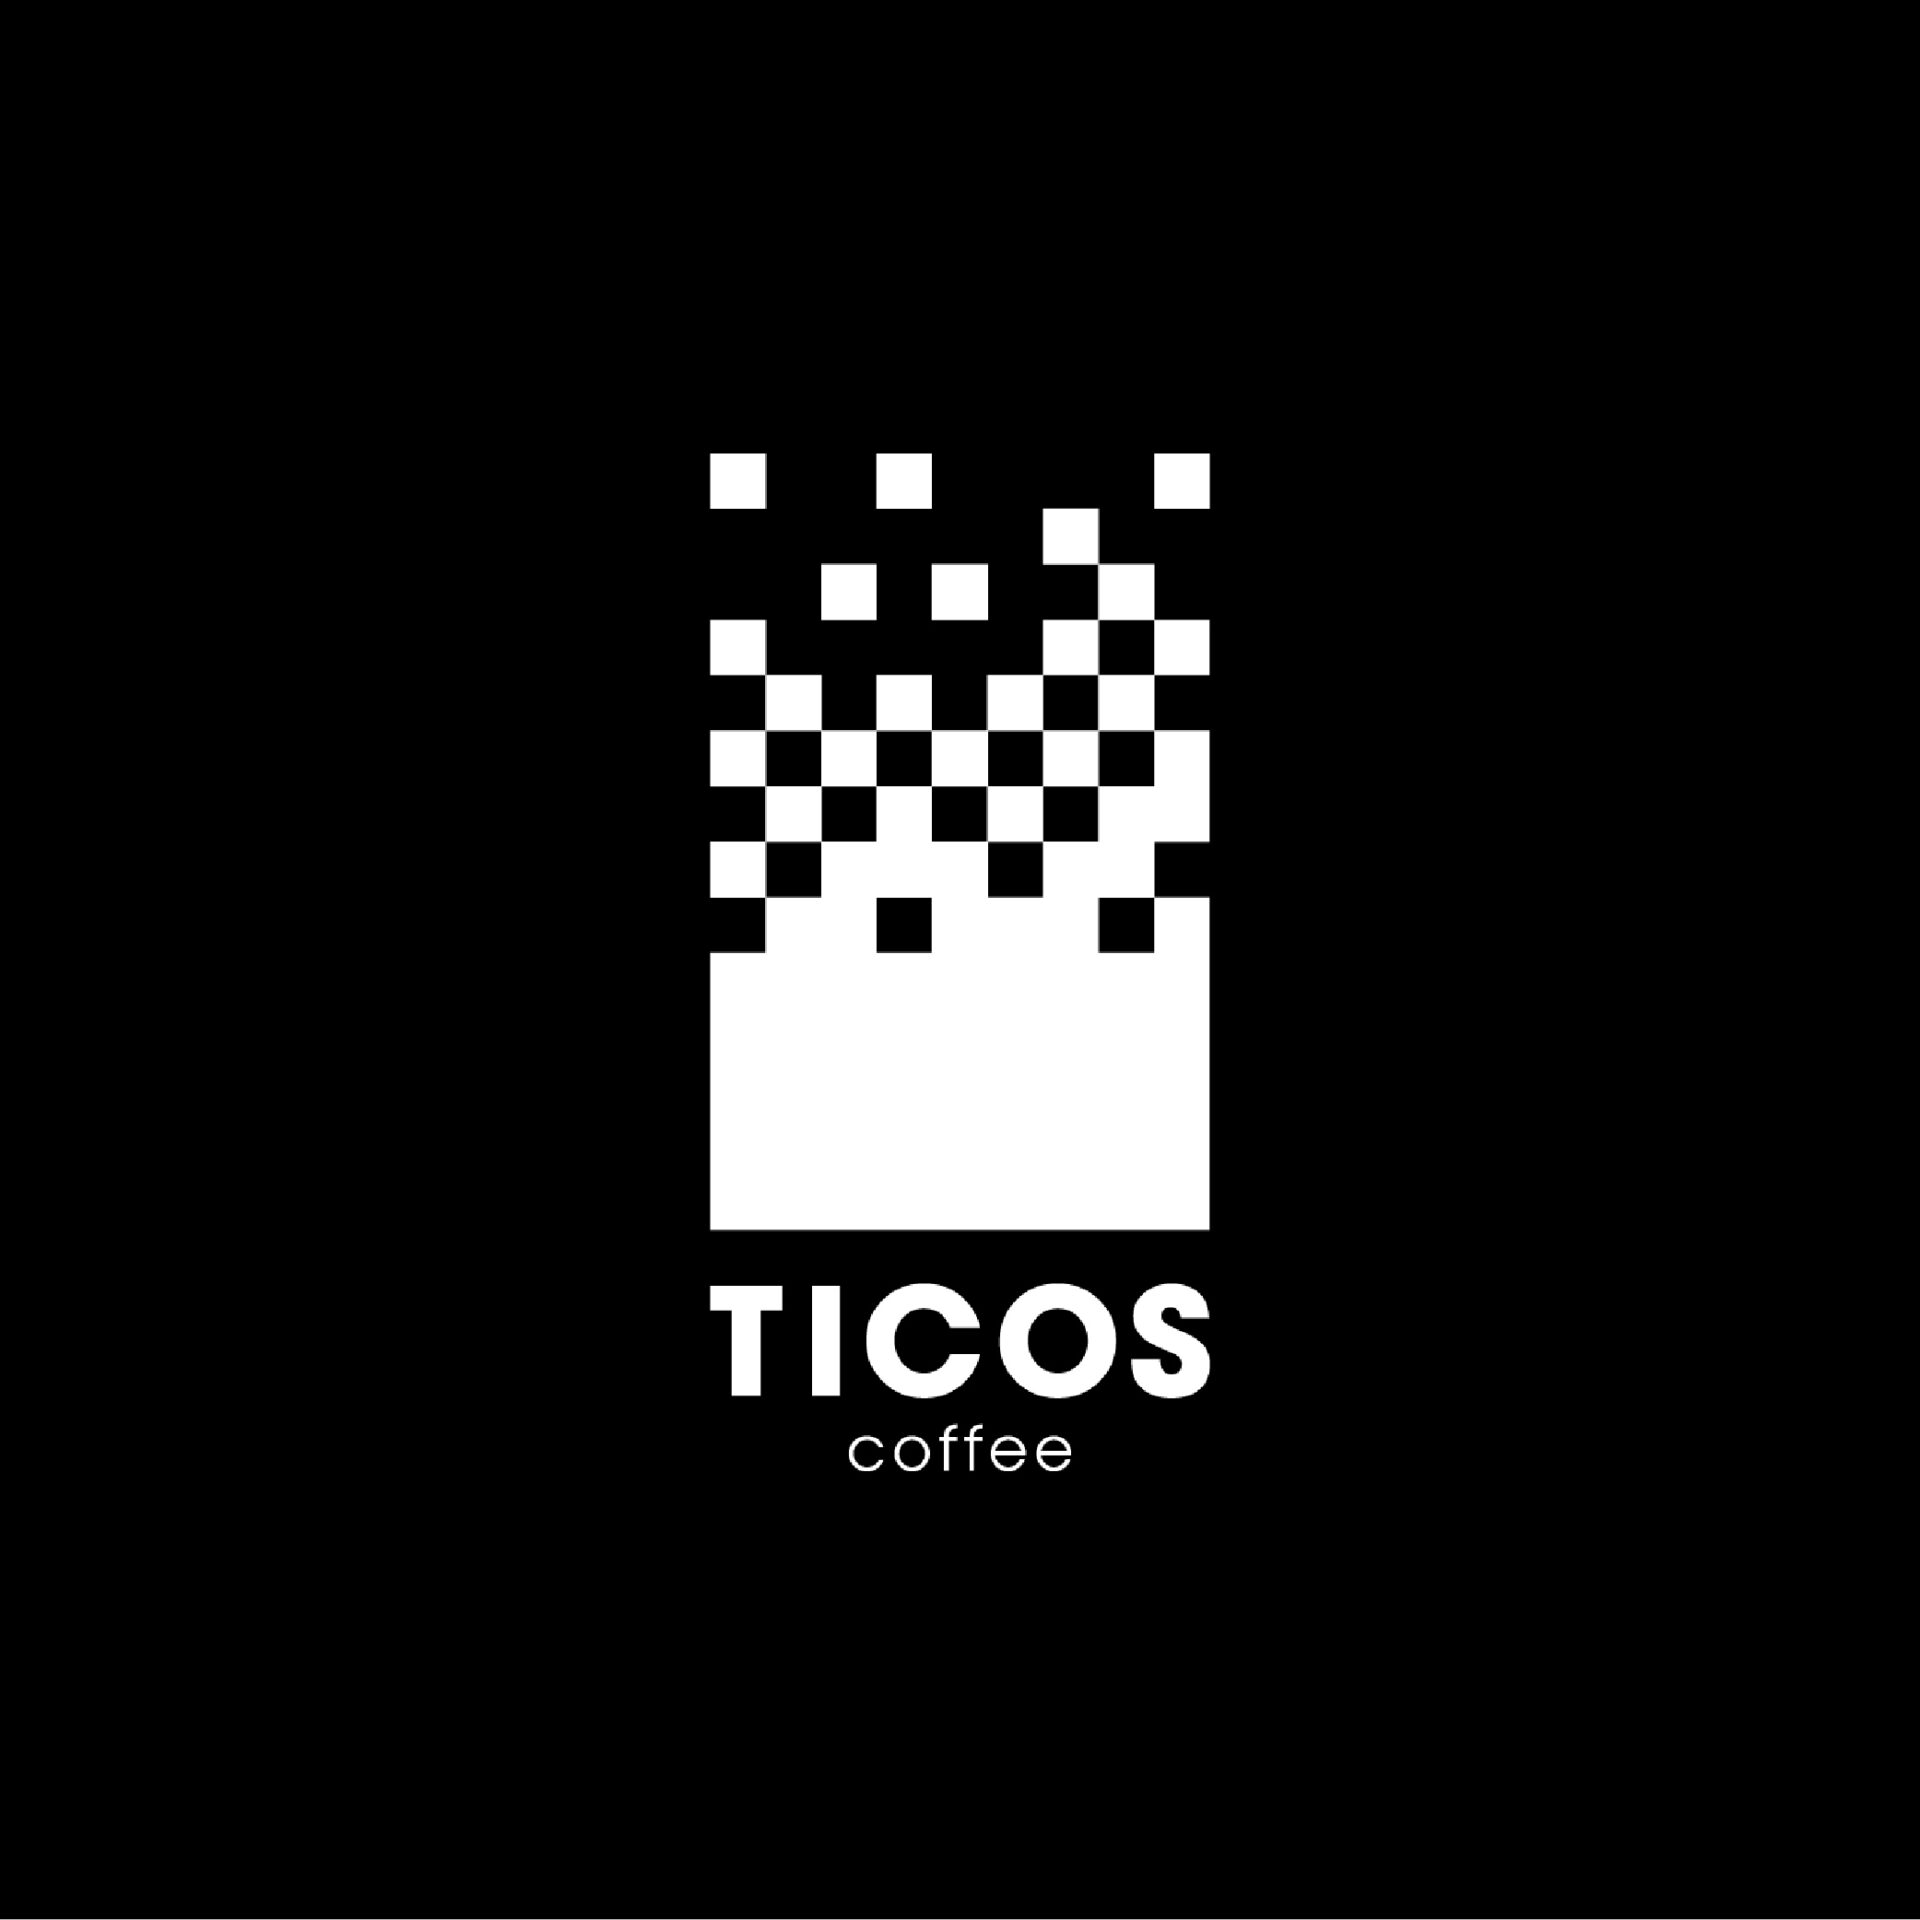 Ticos logo 02 scaled